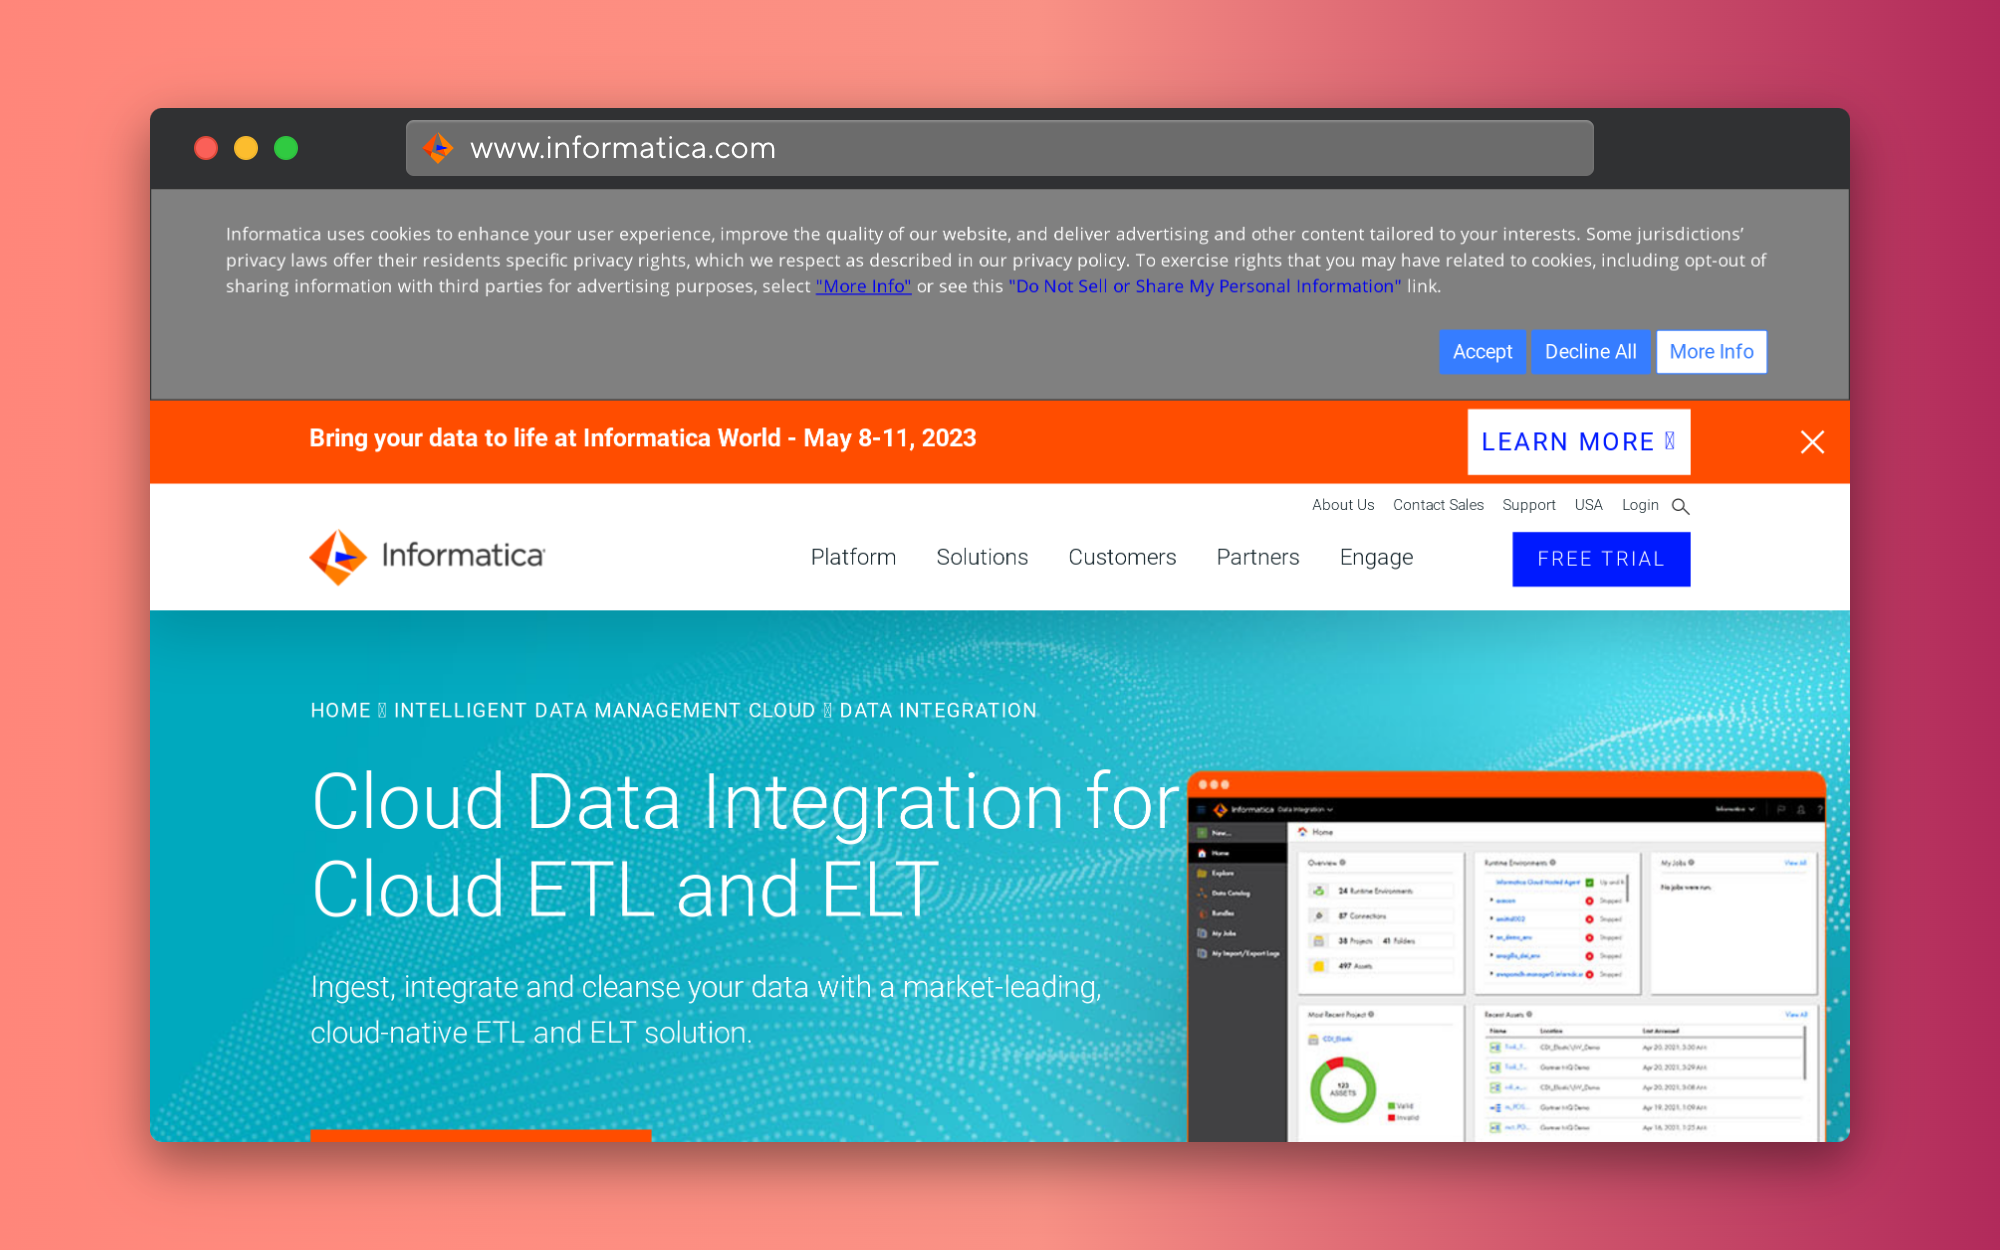 Informatica Cloud Data Integration